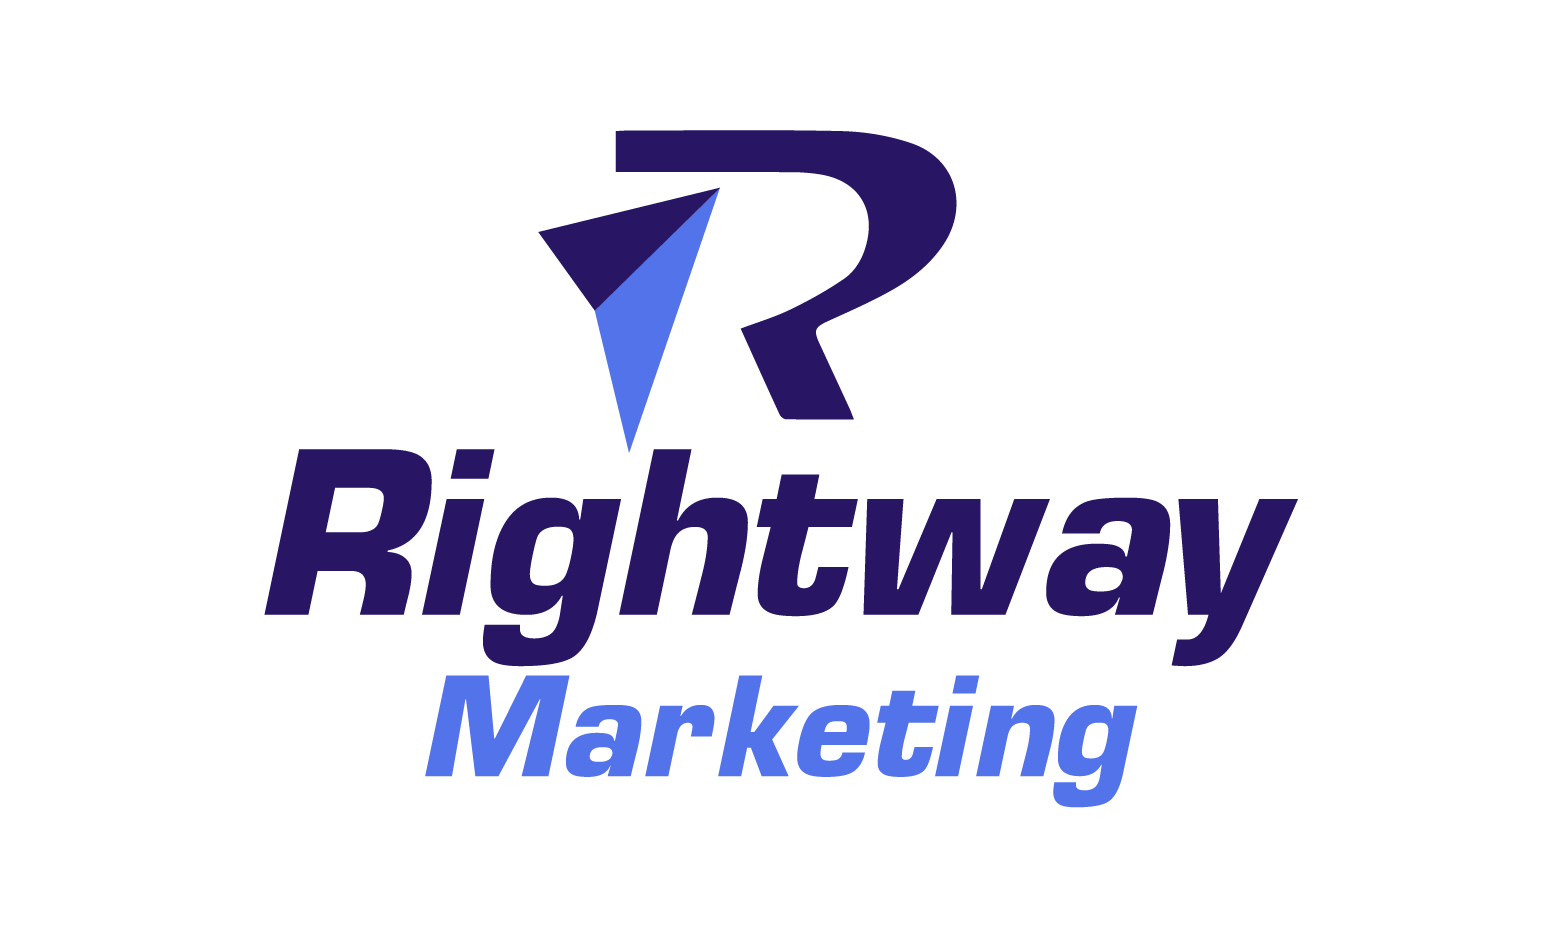 RightwayMarketing.com - Creative brandable domain for sale